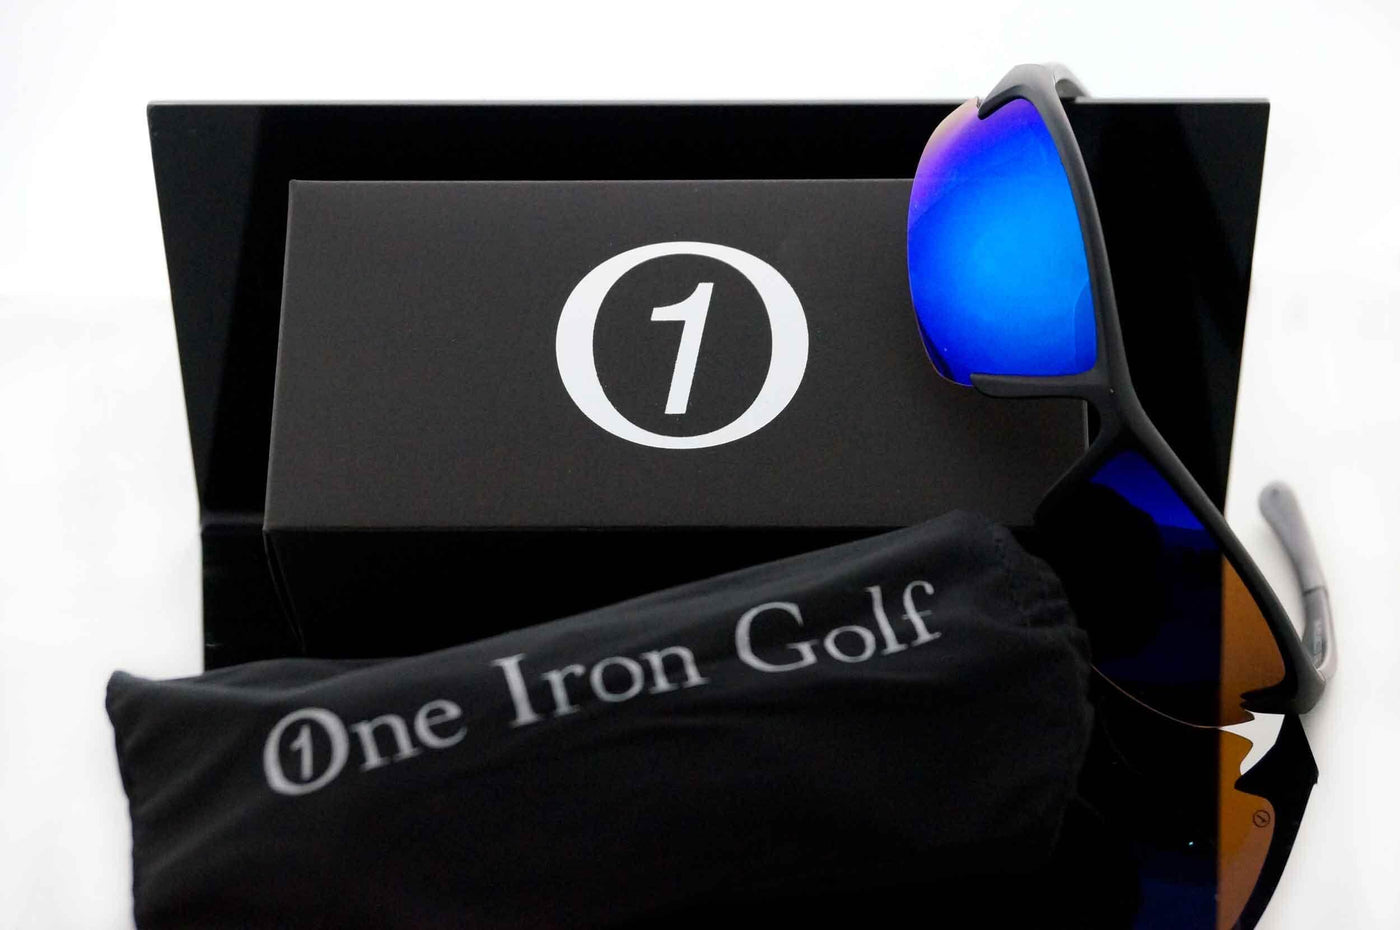 One Iron Golf Polarized Sunglasses in Blue